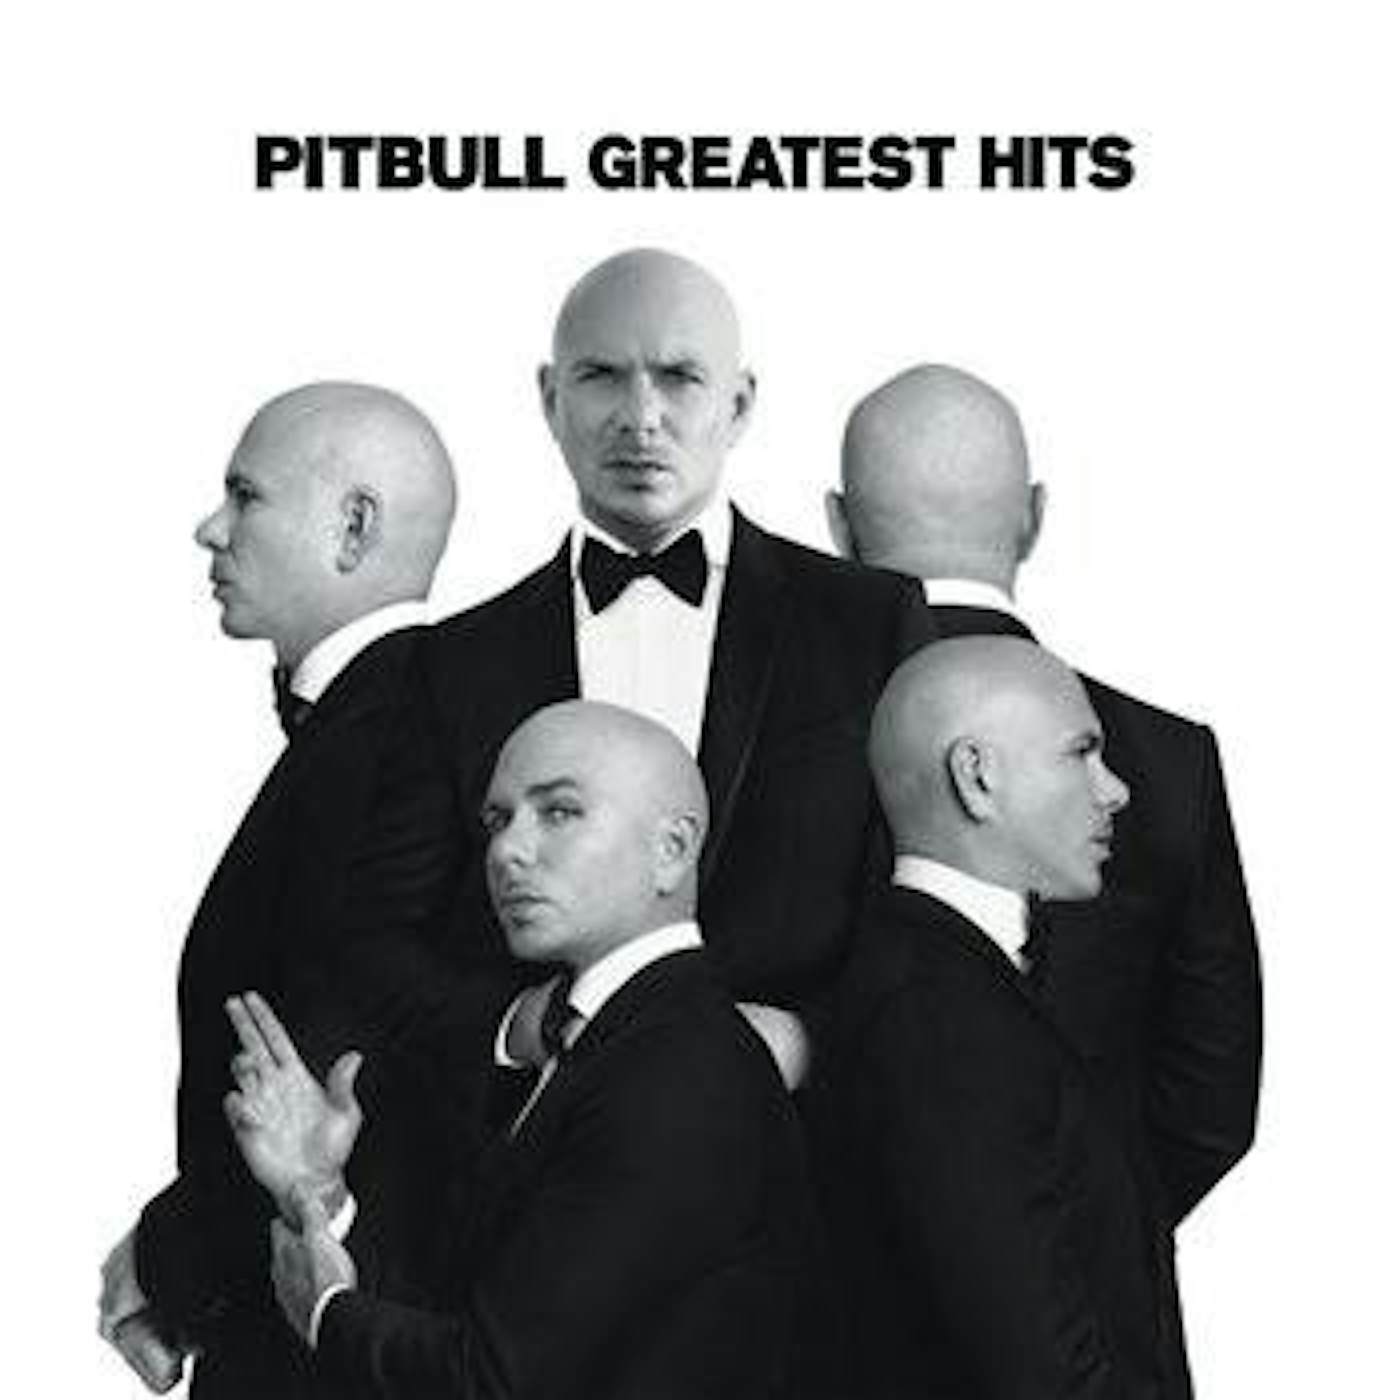 Pitbull GREATEST HITS CD